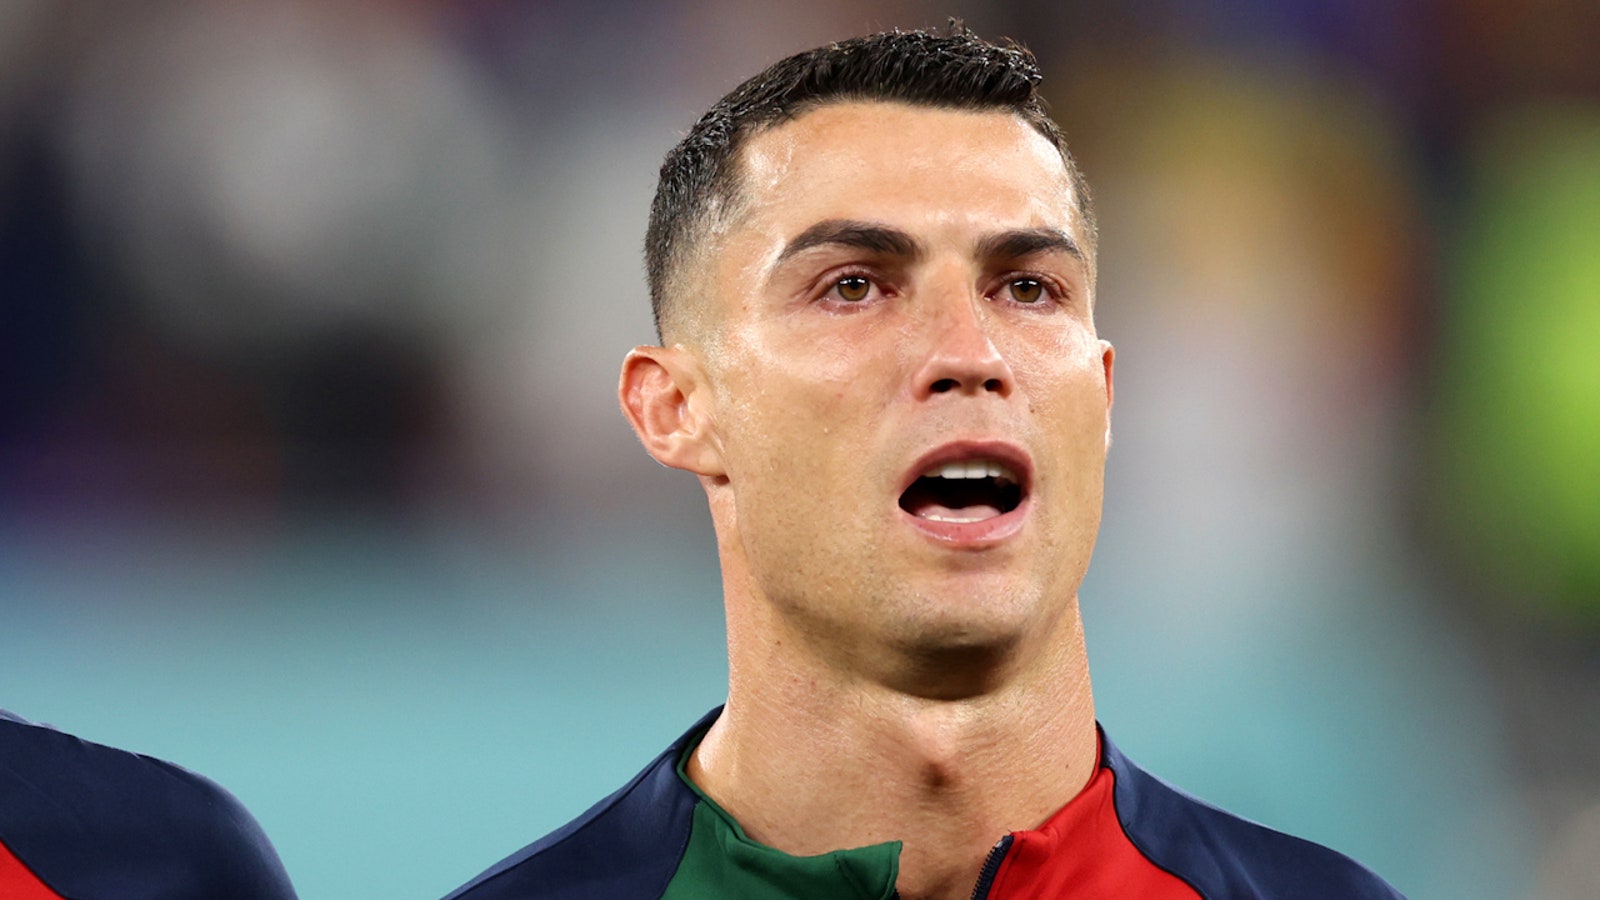 Ronaldo tears during Portuguese national anthem